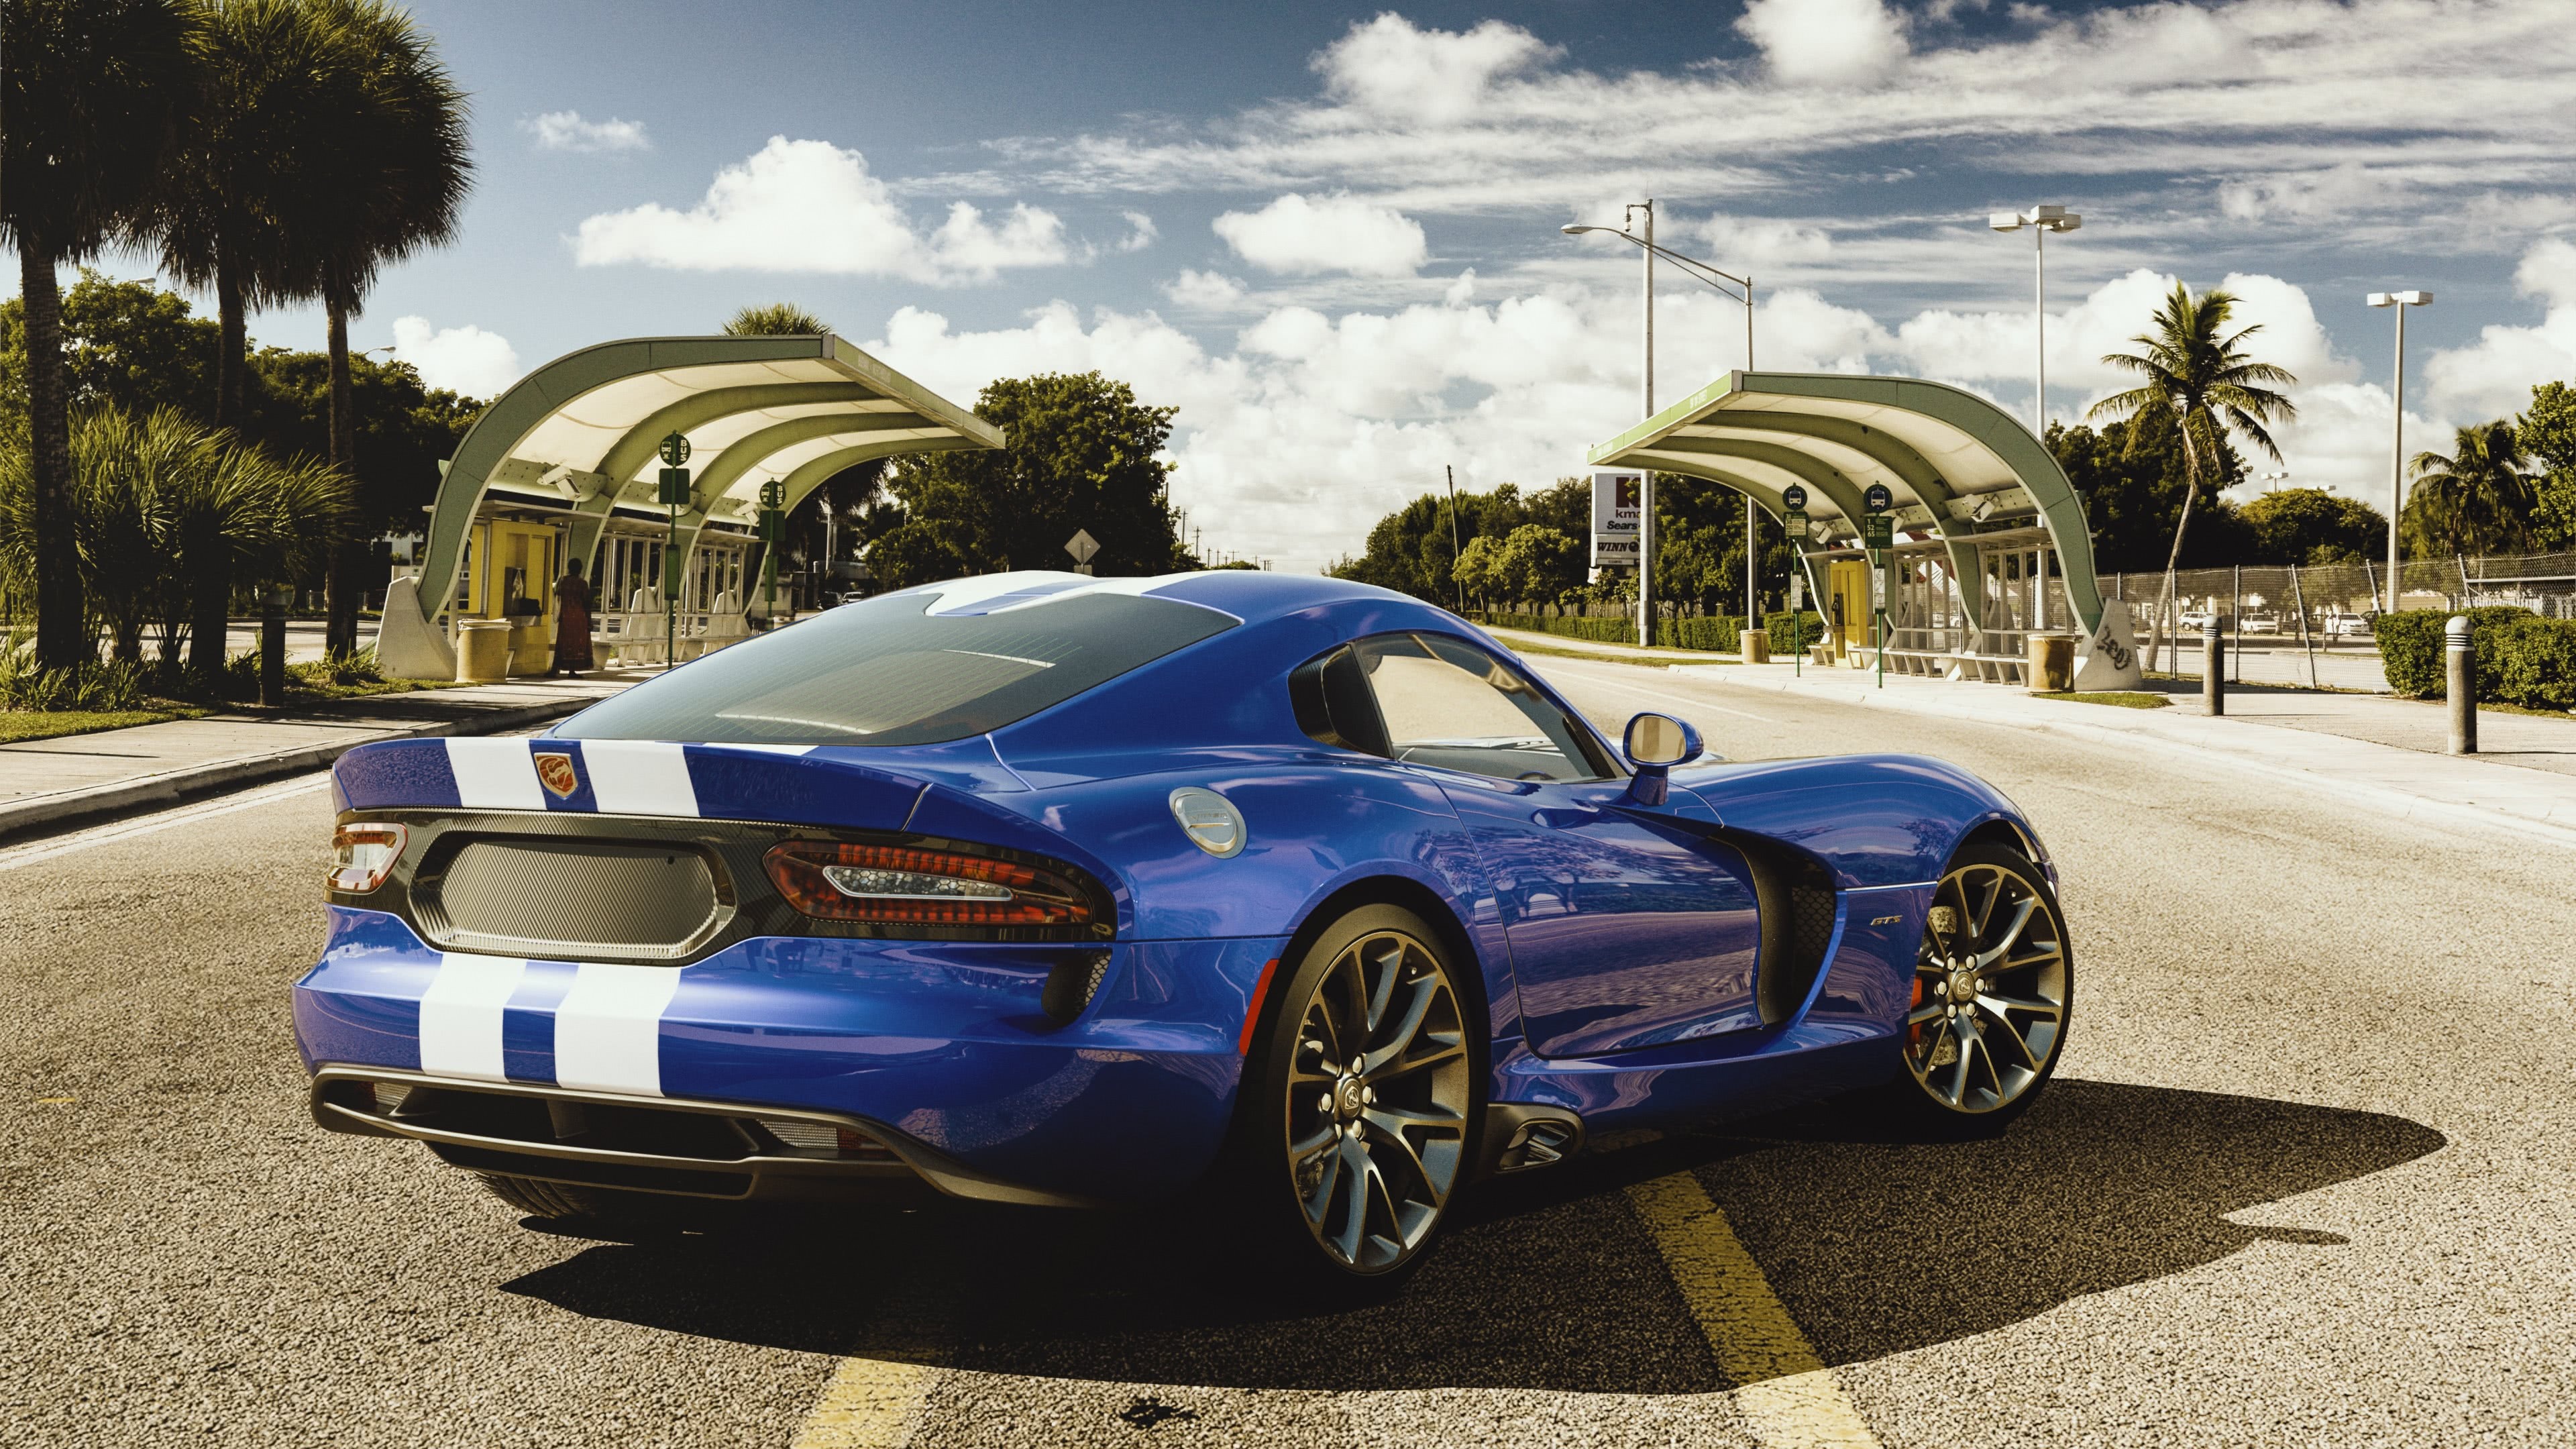 Dodge Viper, Blue beauty, GTS edition, UHD 4K wallpaper, 3840x2160 4K Desktop